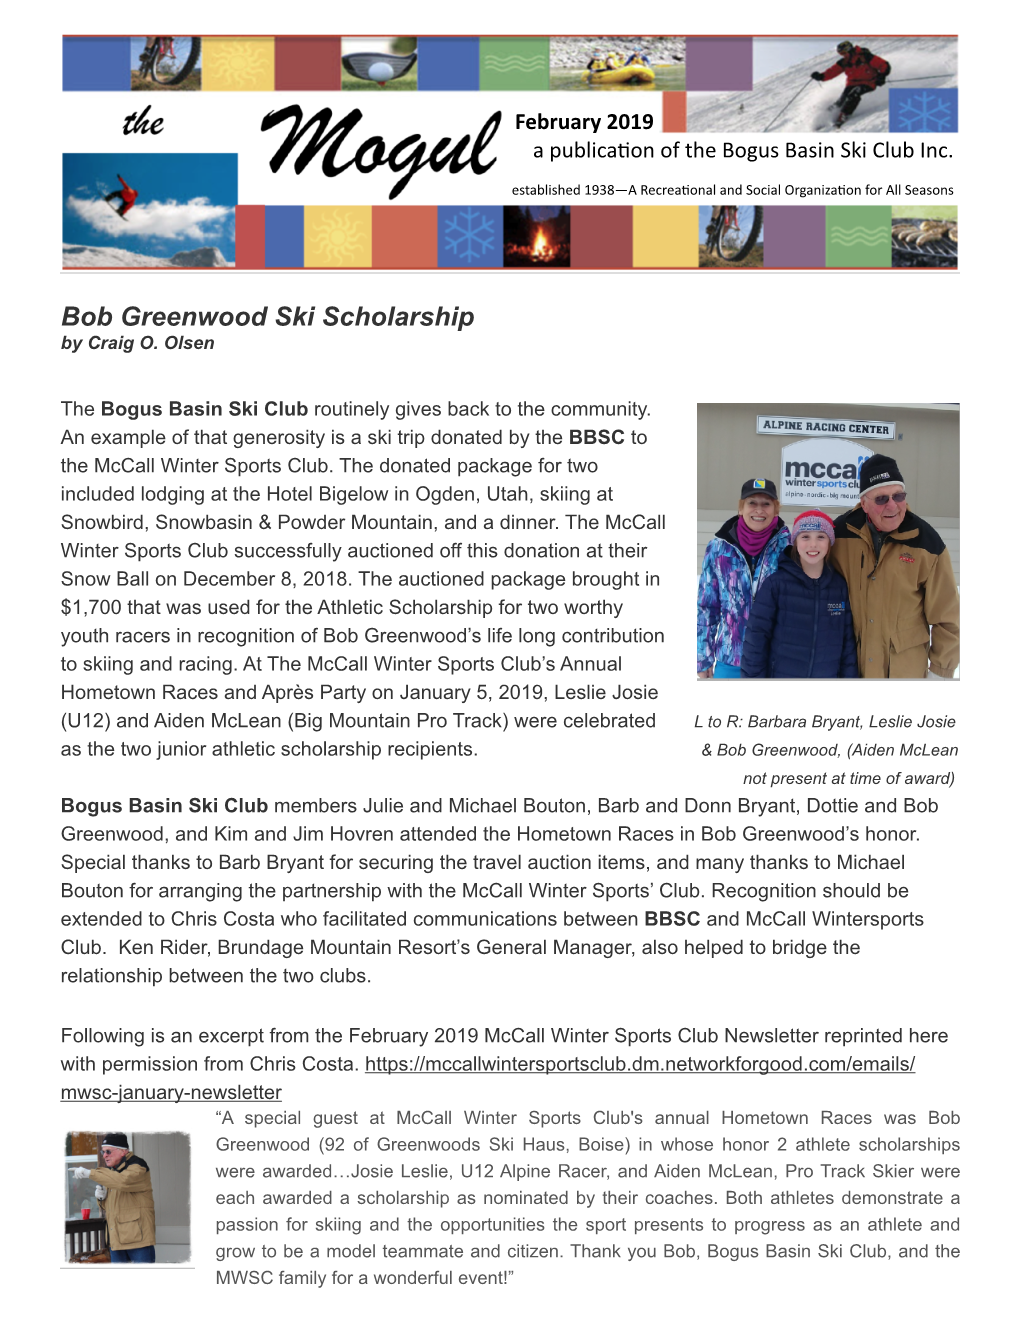 Bob Greenwood Ski Scholarship by Craig O